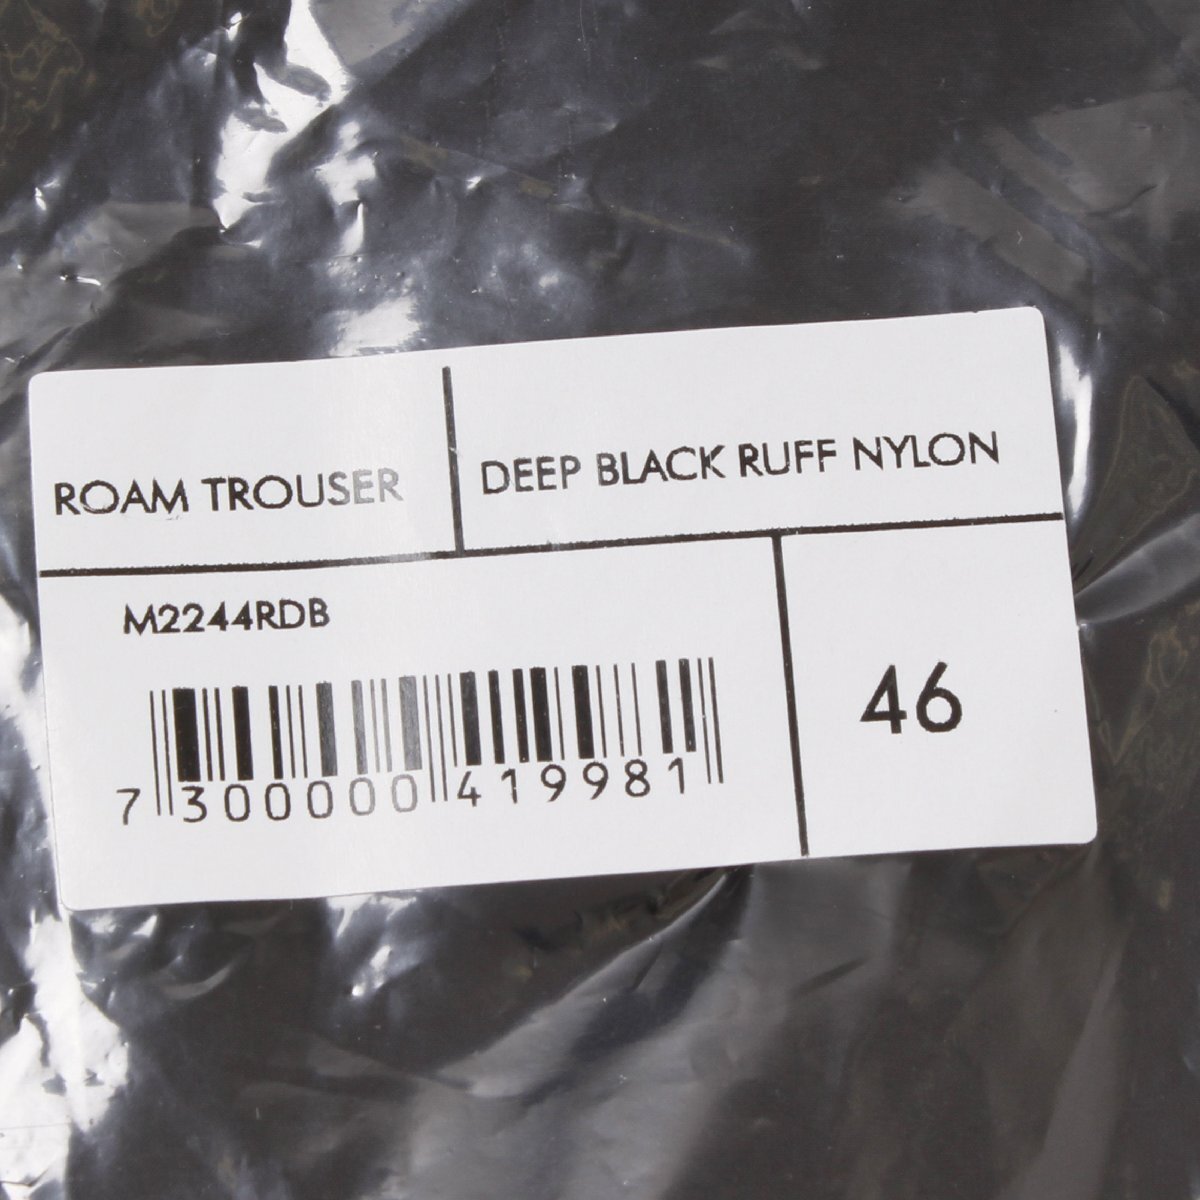 24ss【タグ付き・新品】OUR LEGACY ROAM TROUSER Deep Black Ruff Nylon 定価75,900円 size46 M2244RDB アワーレガシー ナイロン パンツ_画像8